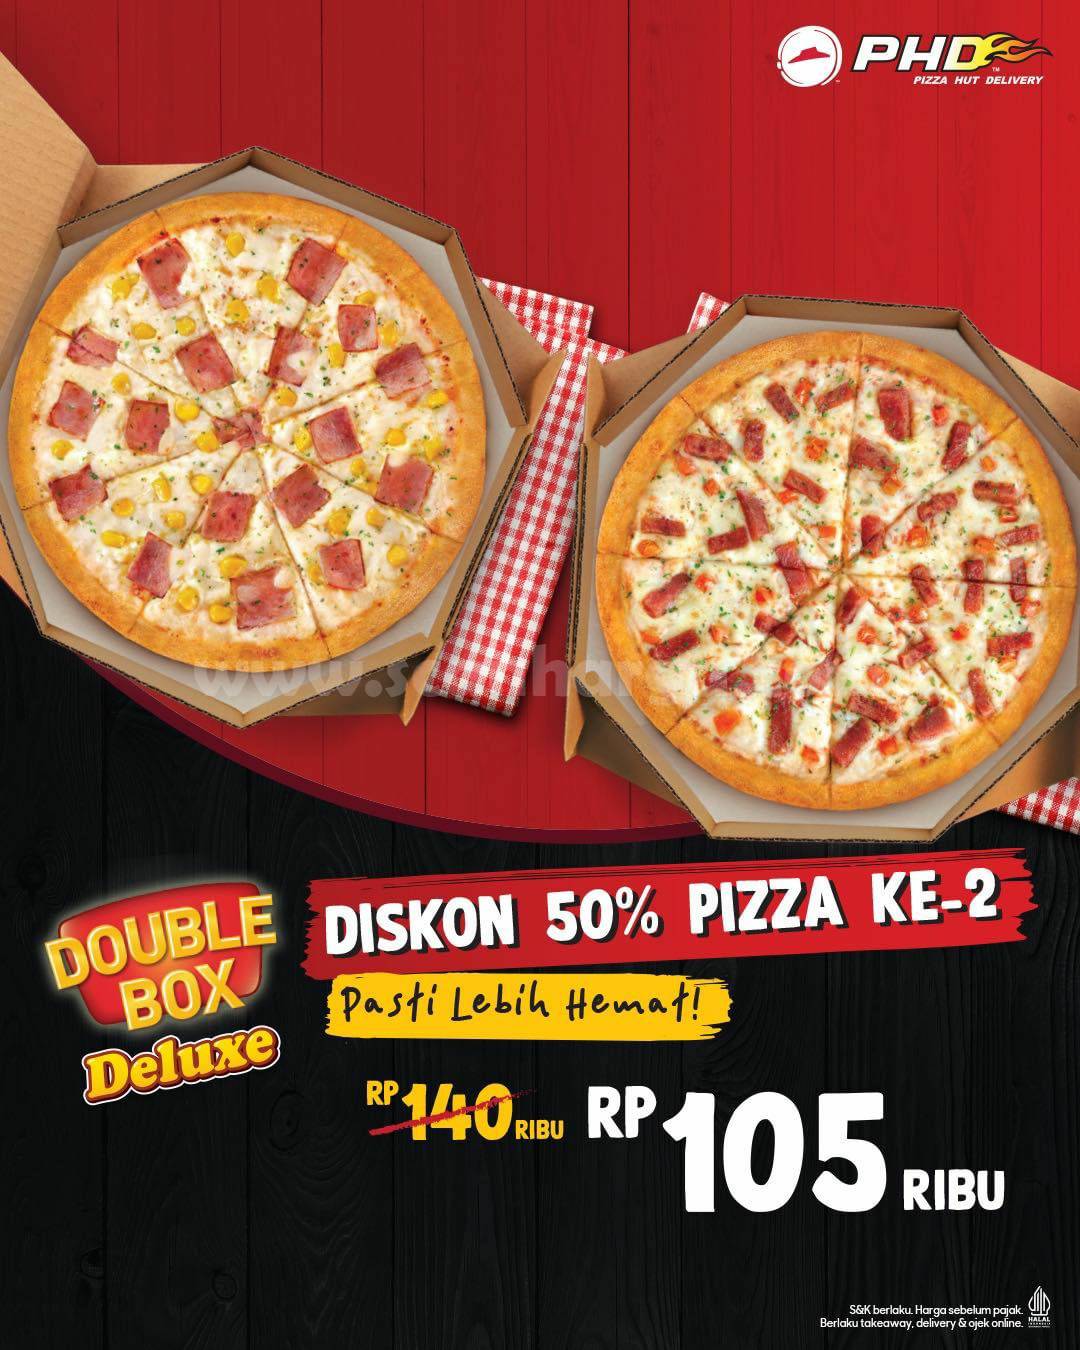 Promo PHD Double Box Deluxe - Beli 2 Paket Pizza hanya 105RB